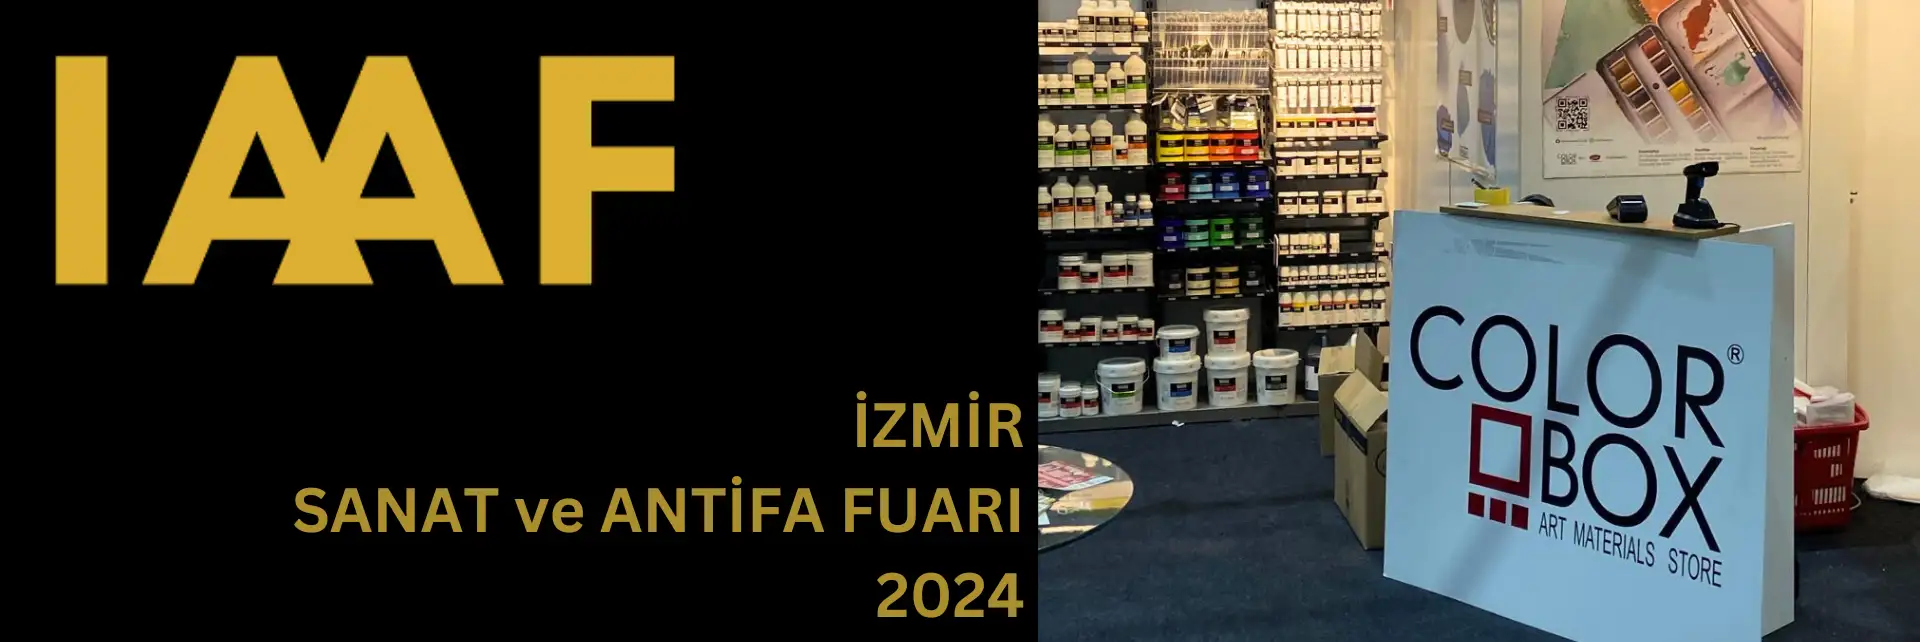 İzmir Sanat ve Antika Fuarı (IAAF) 2024